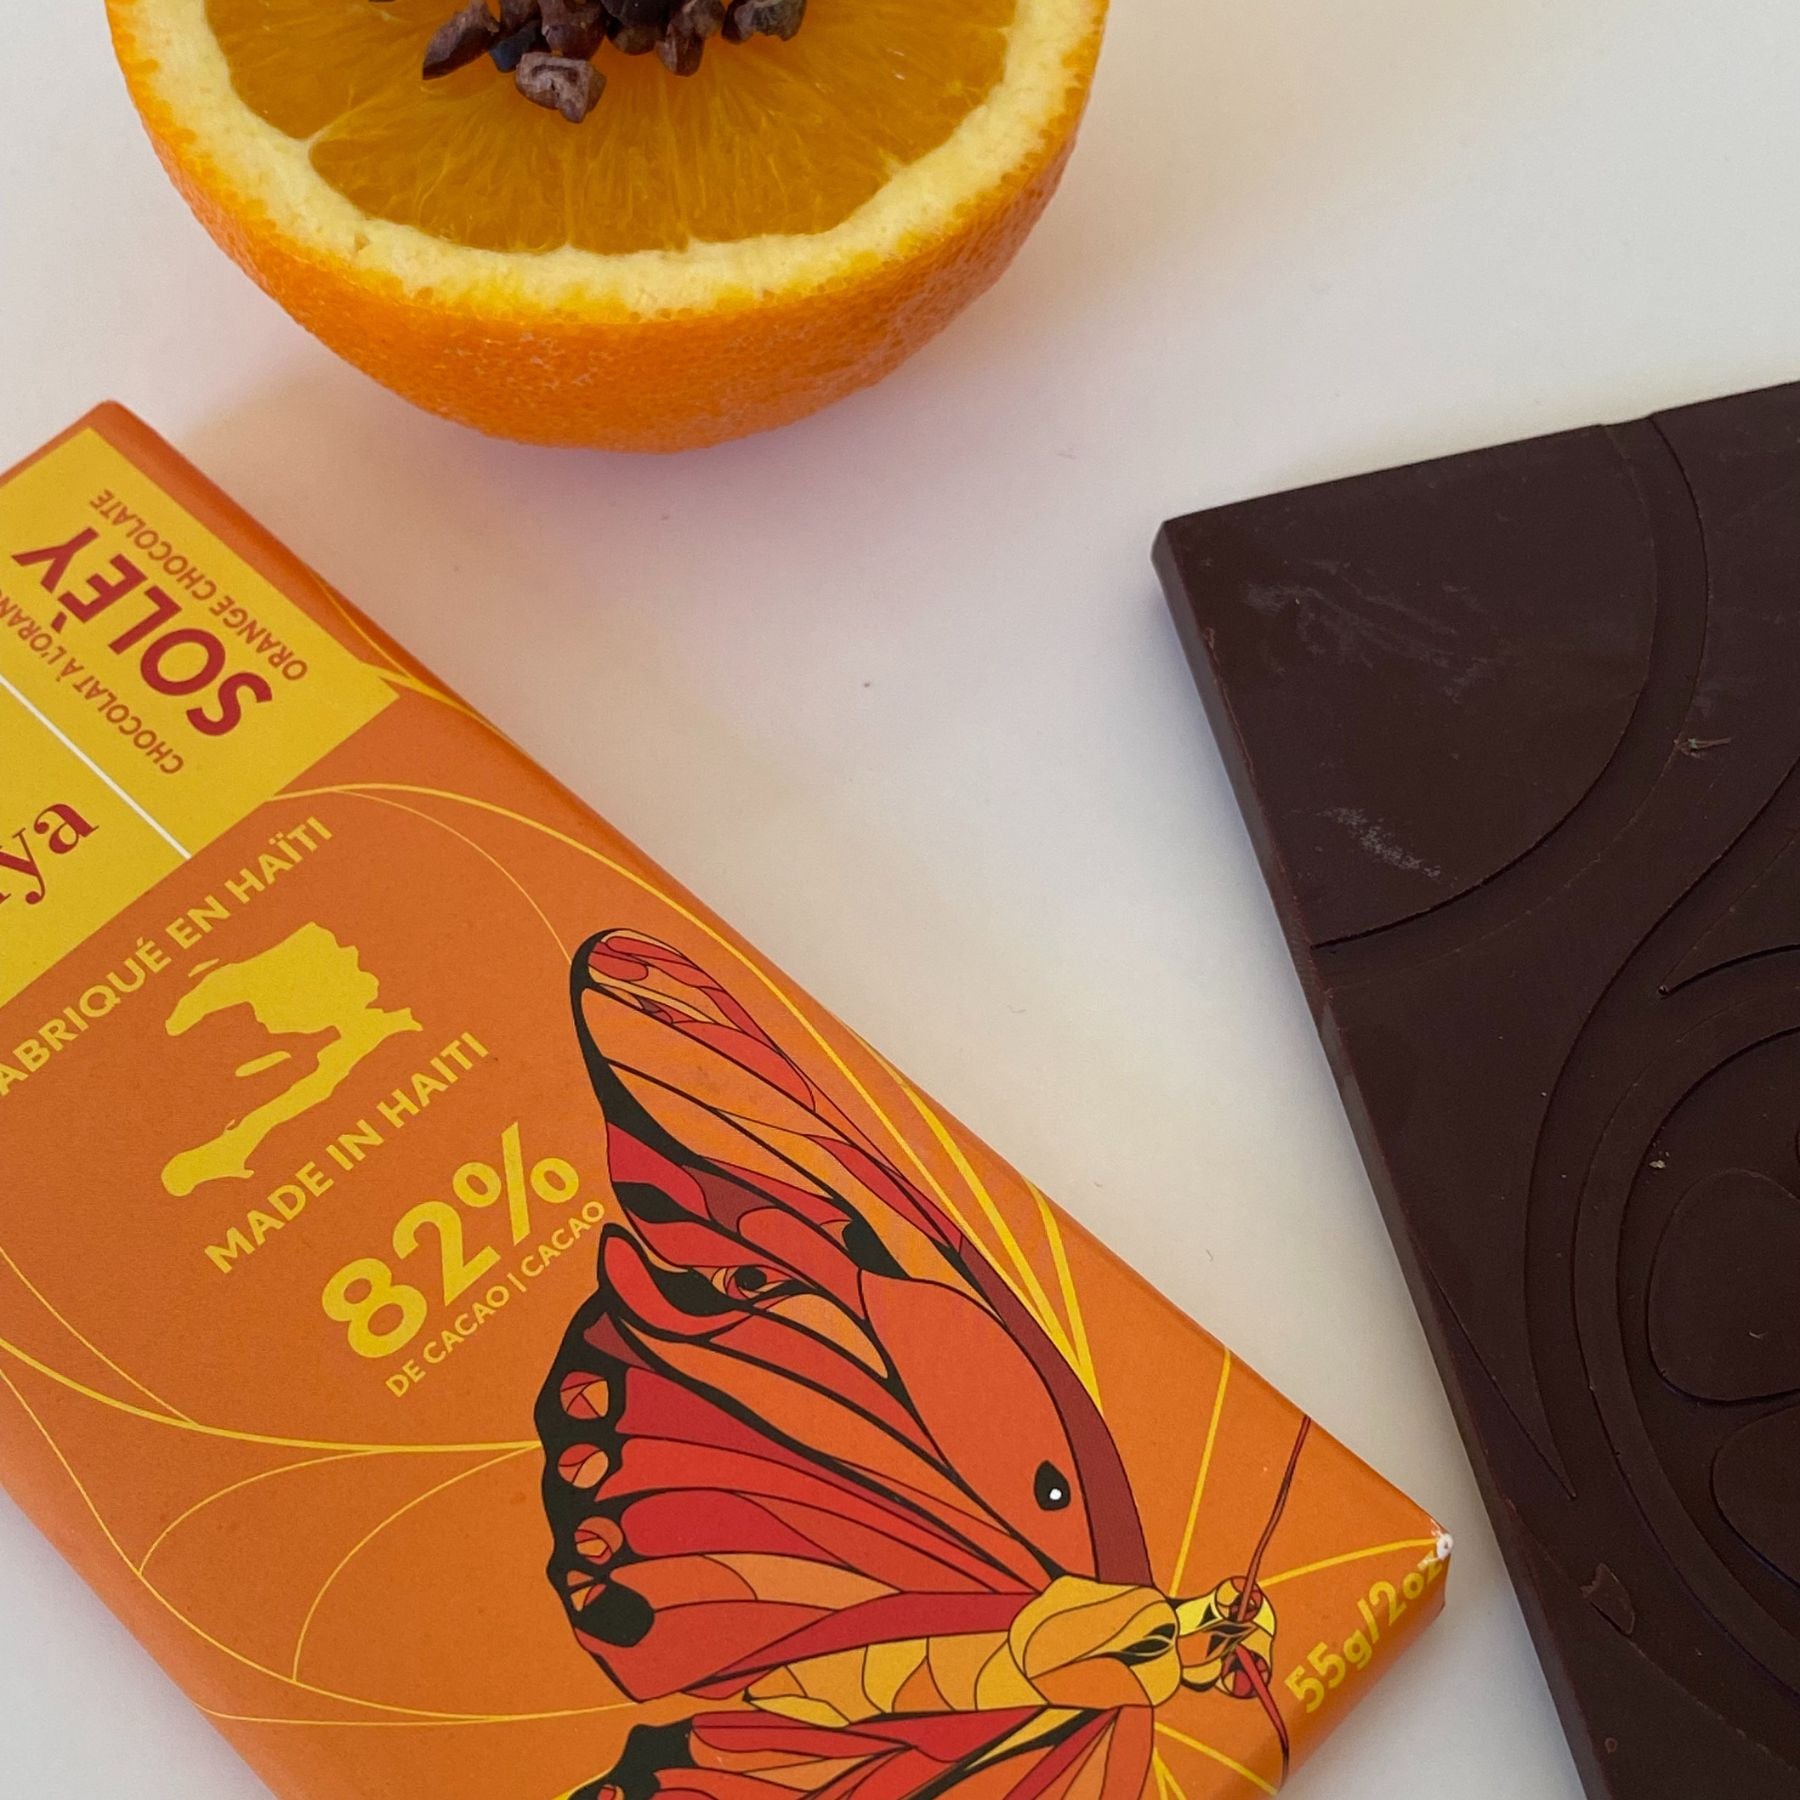 Askanya Chocolate Haiti Single Origin-Made 82% Cacao Content Dark Chocolate with Orange Zest and Rapadou Artisanal Cane Sugar